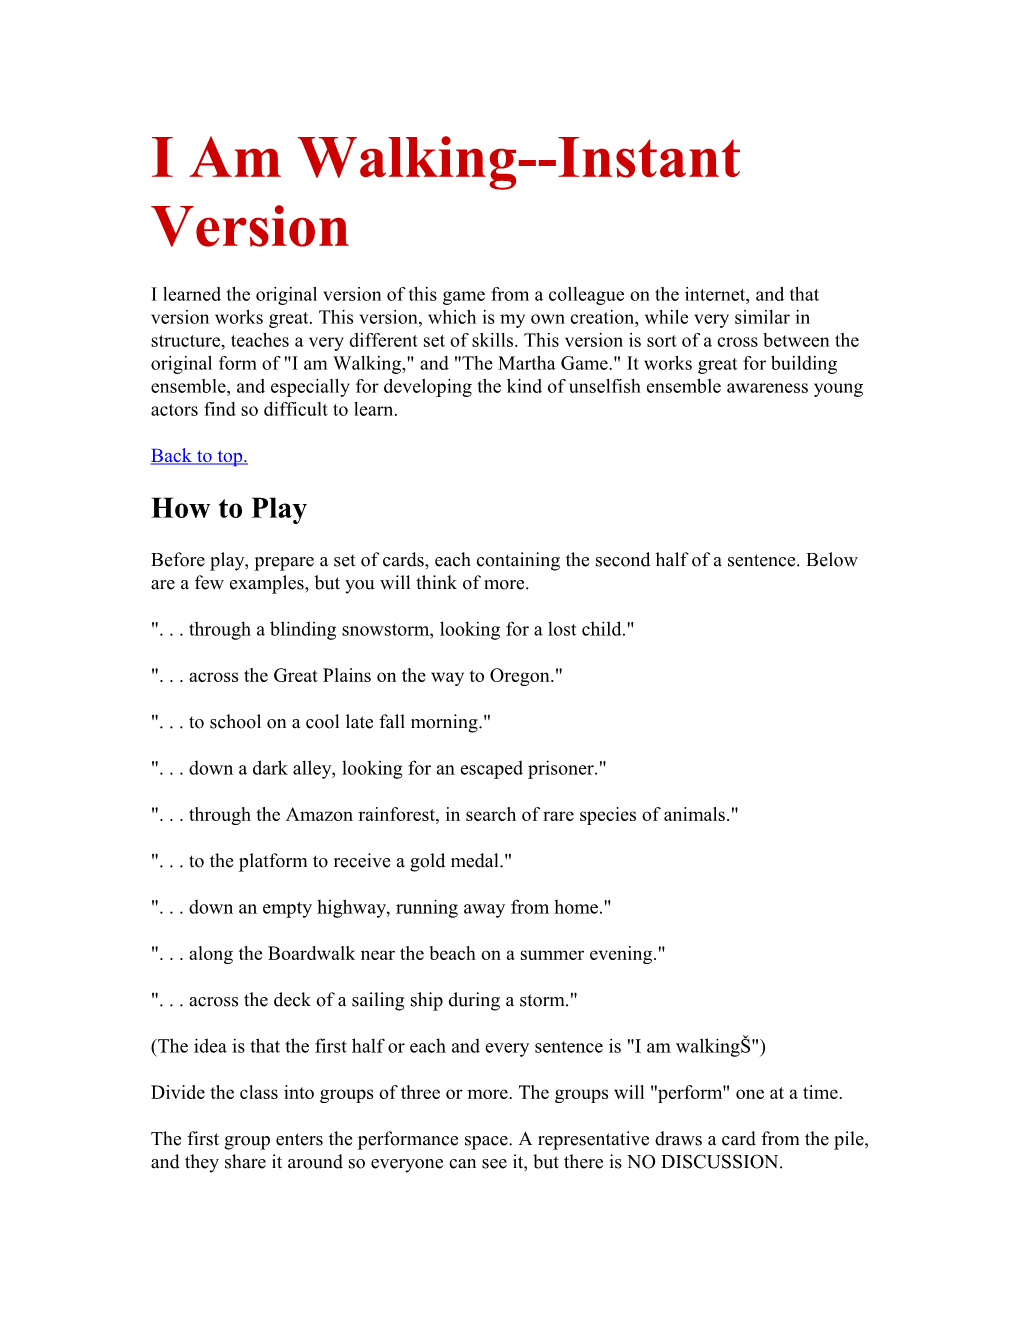 I Am Walking Instant Version